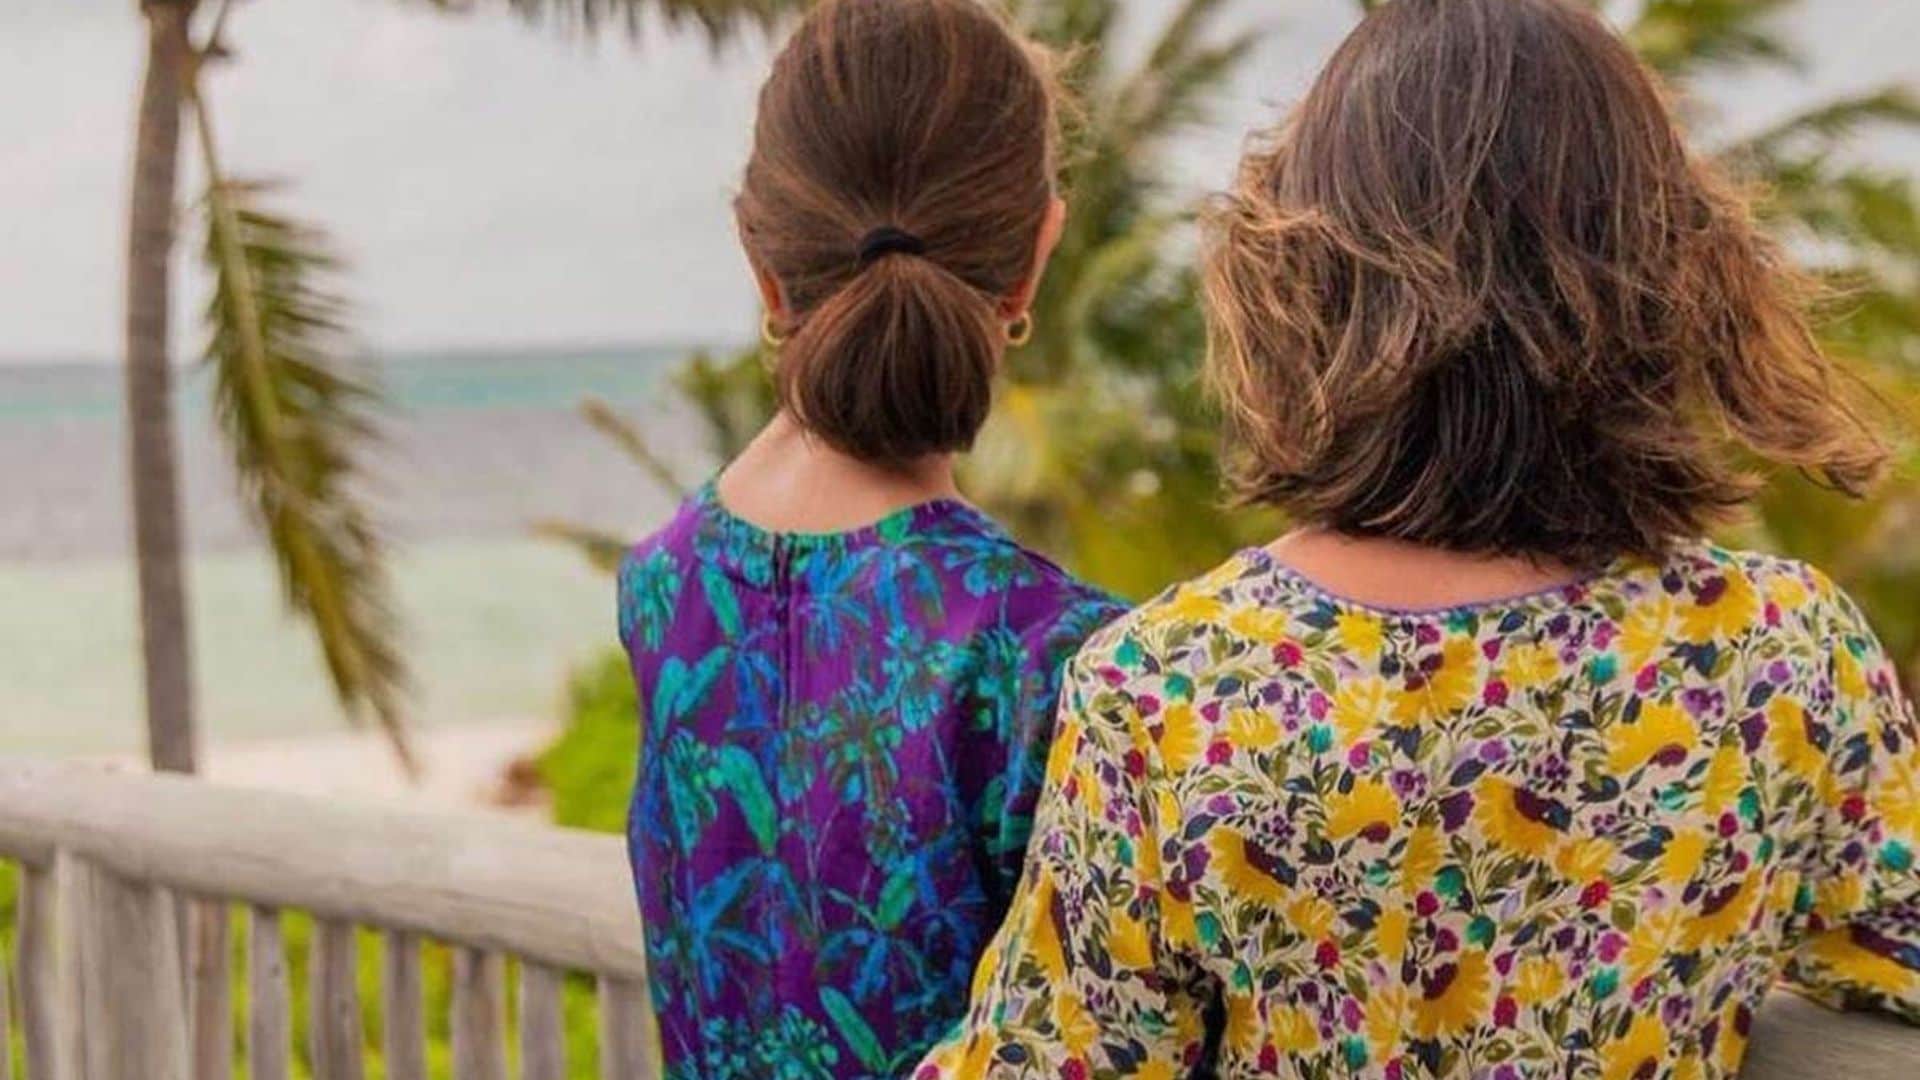 Tamara Falcó e Isabel Preysler comparten vestidos estampados en un enclave paradisíaco